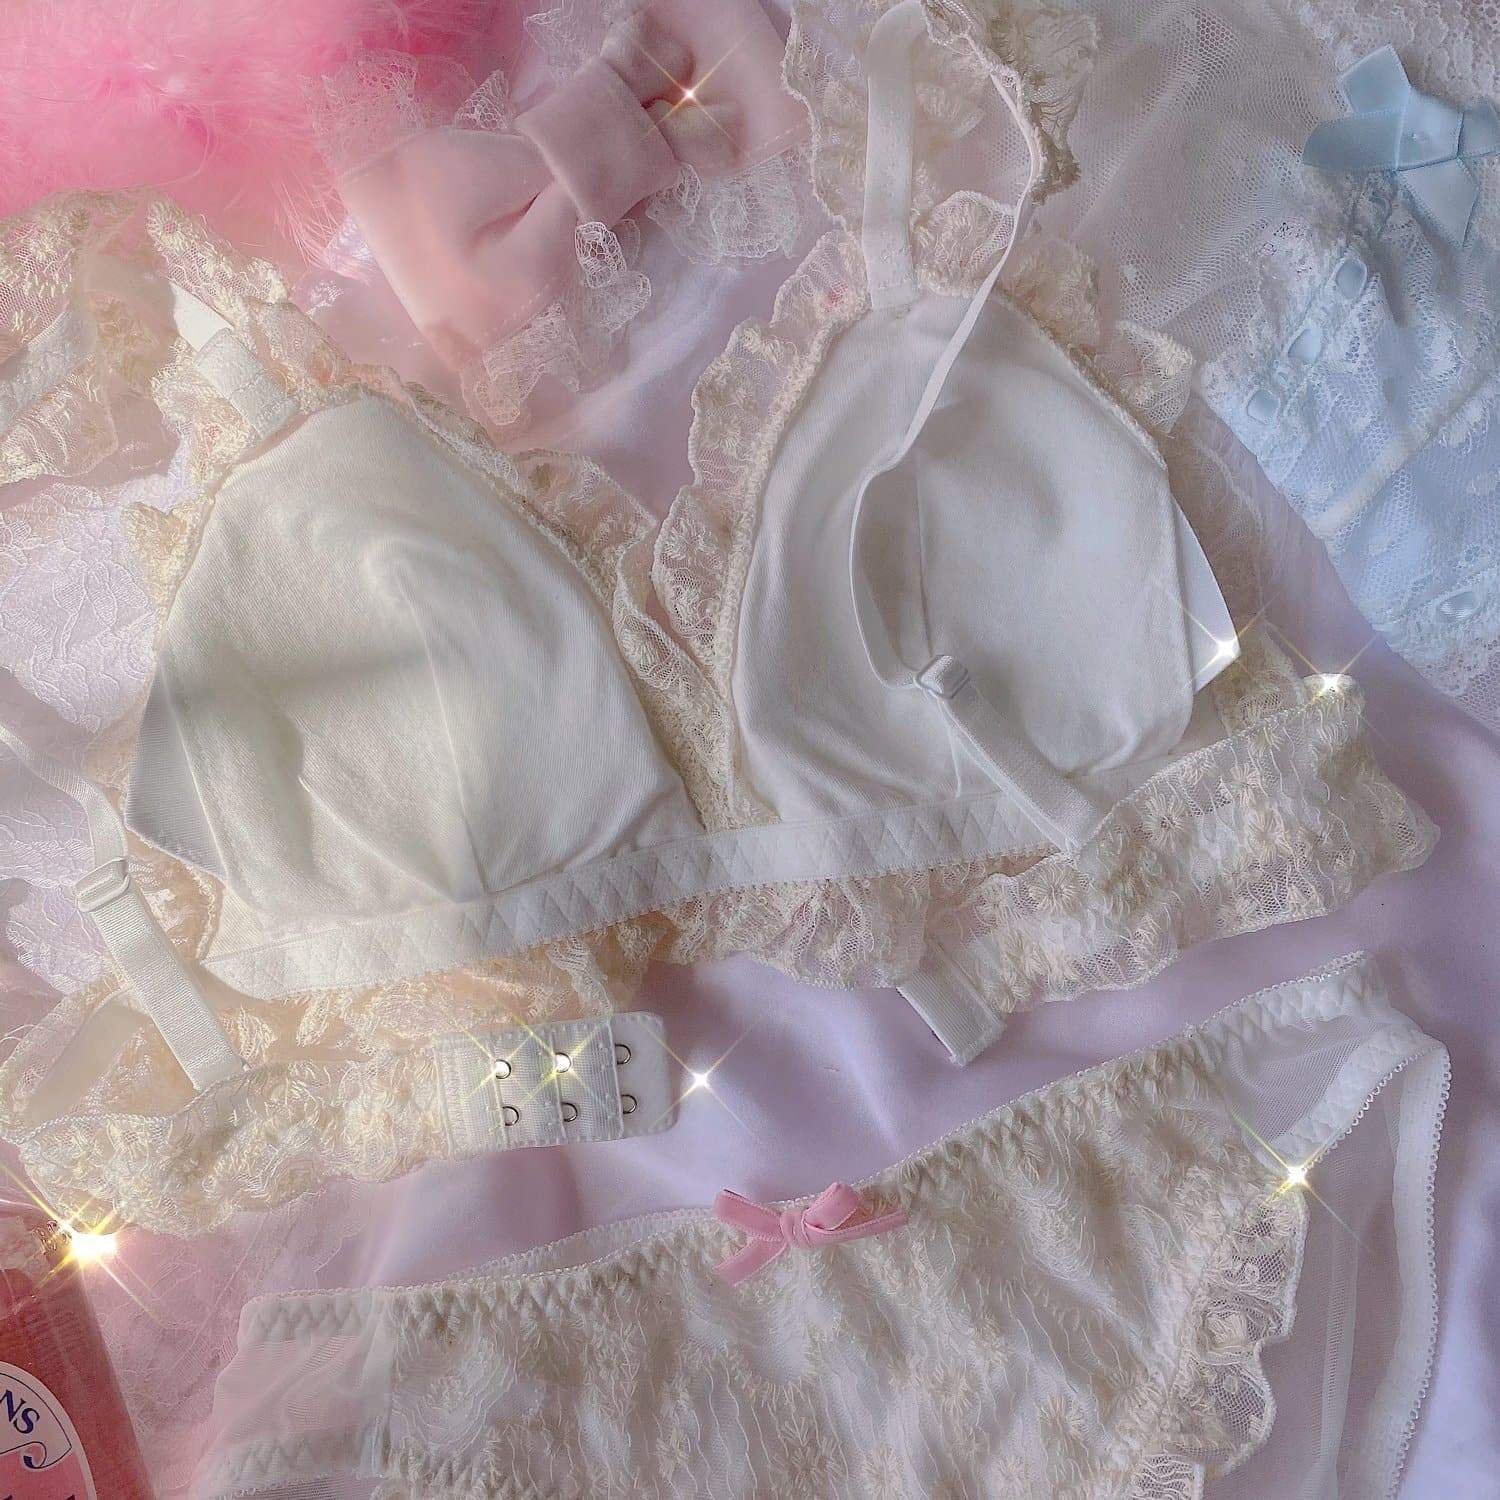 Castle of Versailles Lace Pink Bow Underwear MK16201